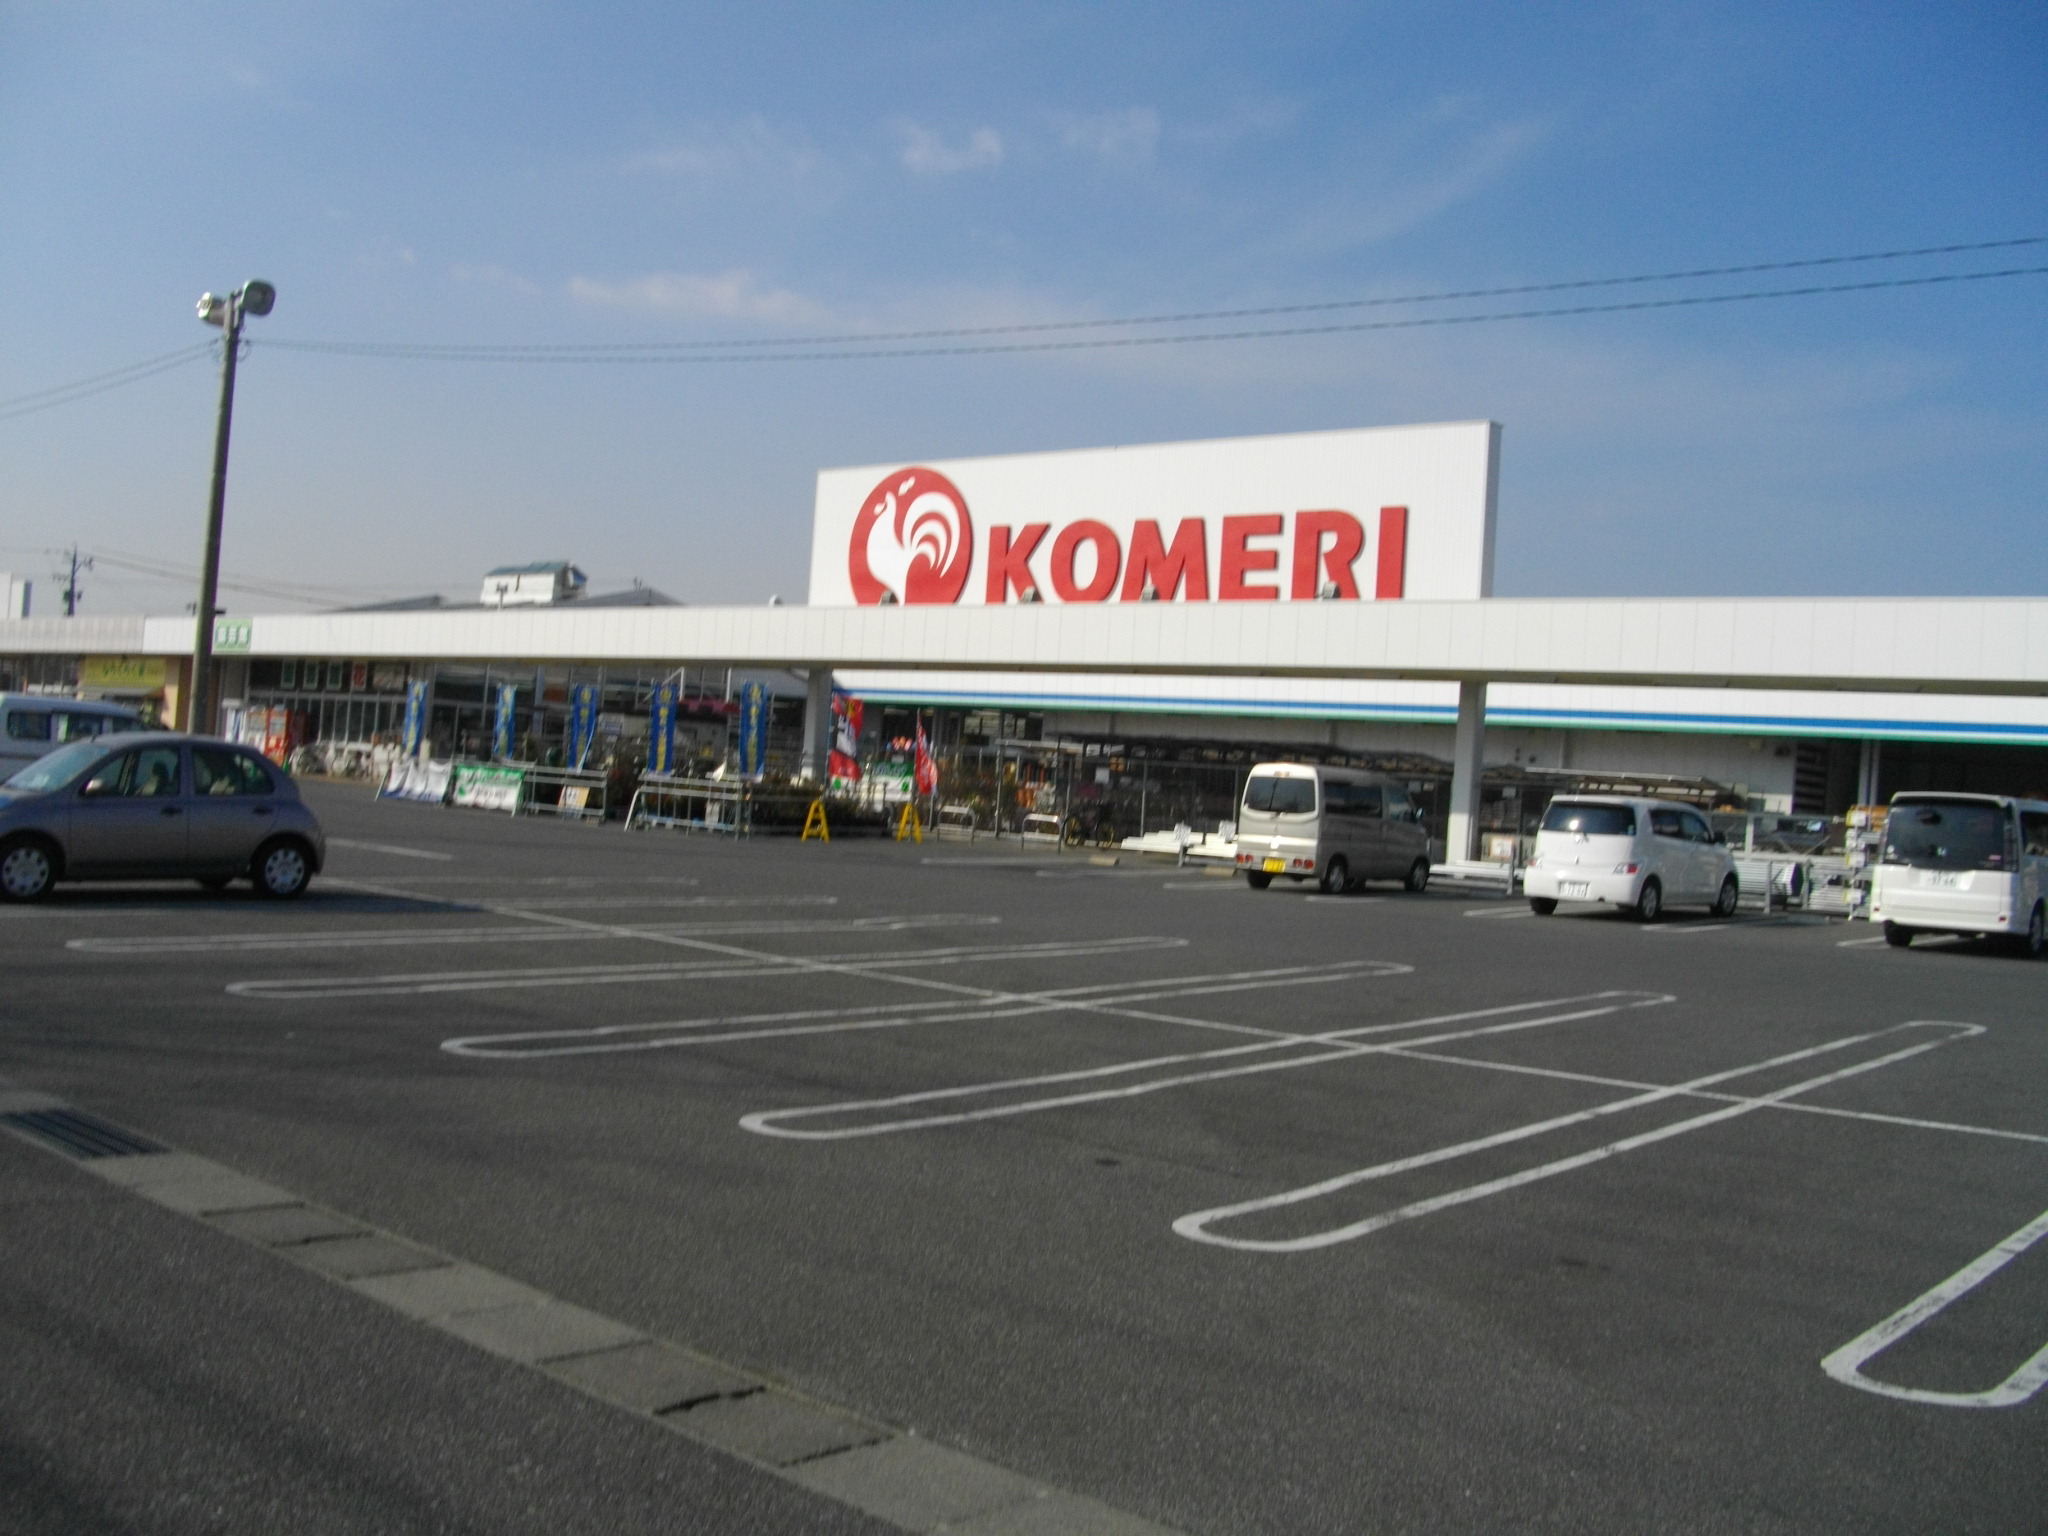 Home center. Komeri Co., Ltd. albino store up (home improvement) 765m